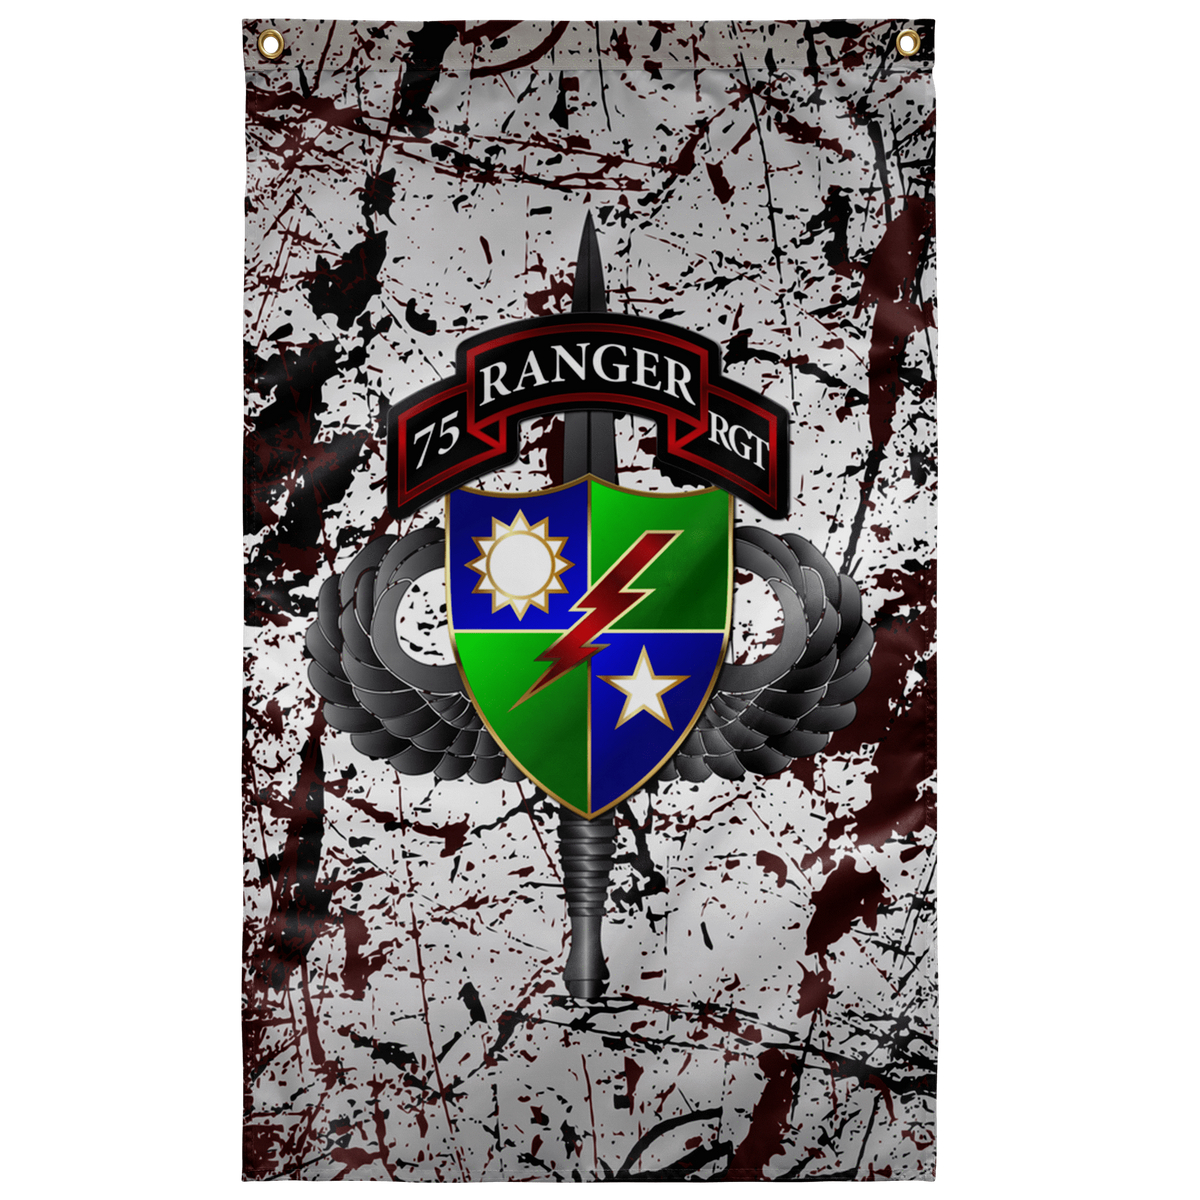 75th ranger regiment wallpaper